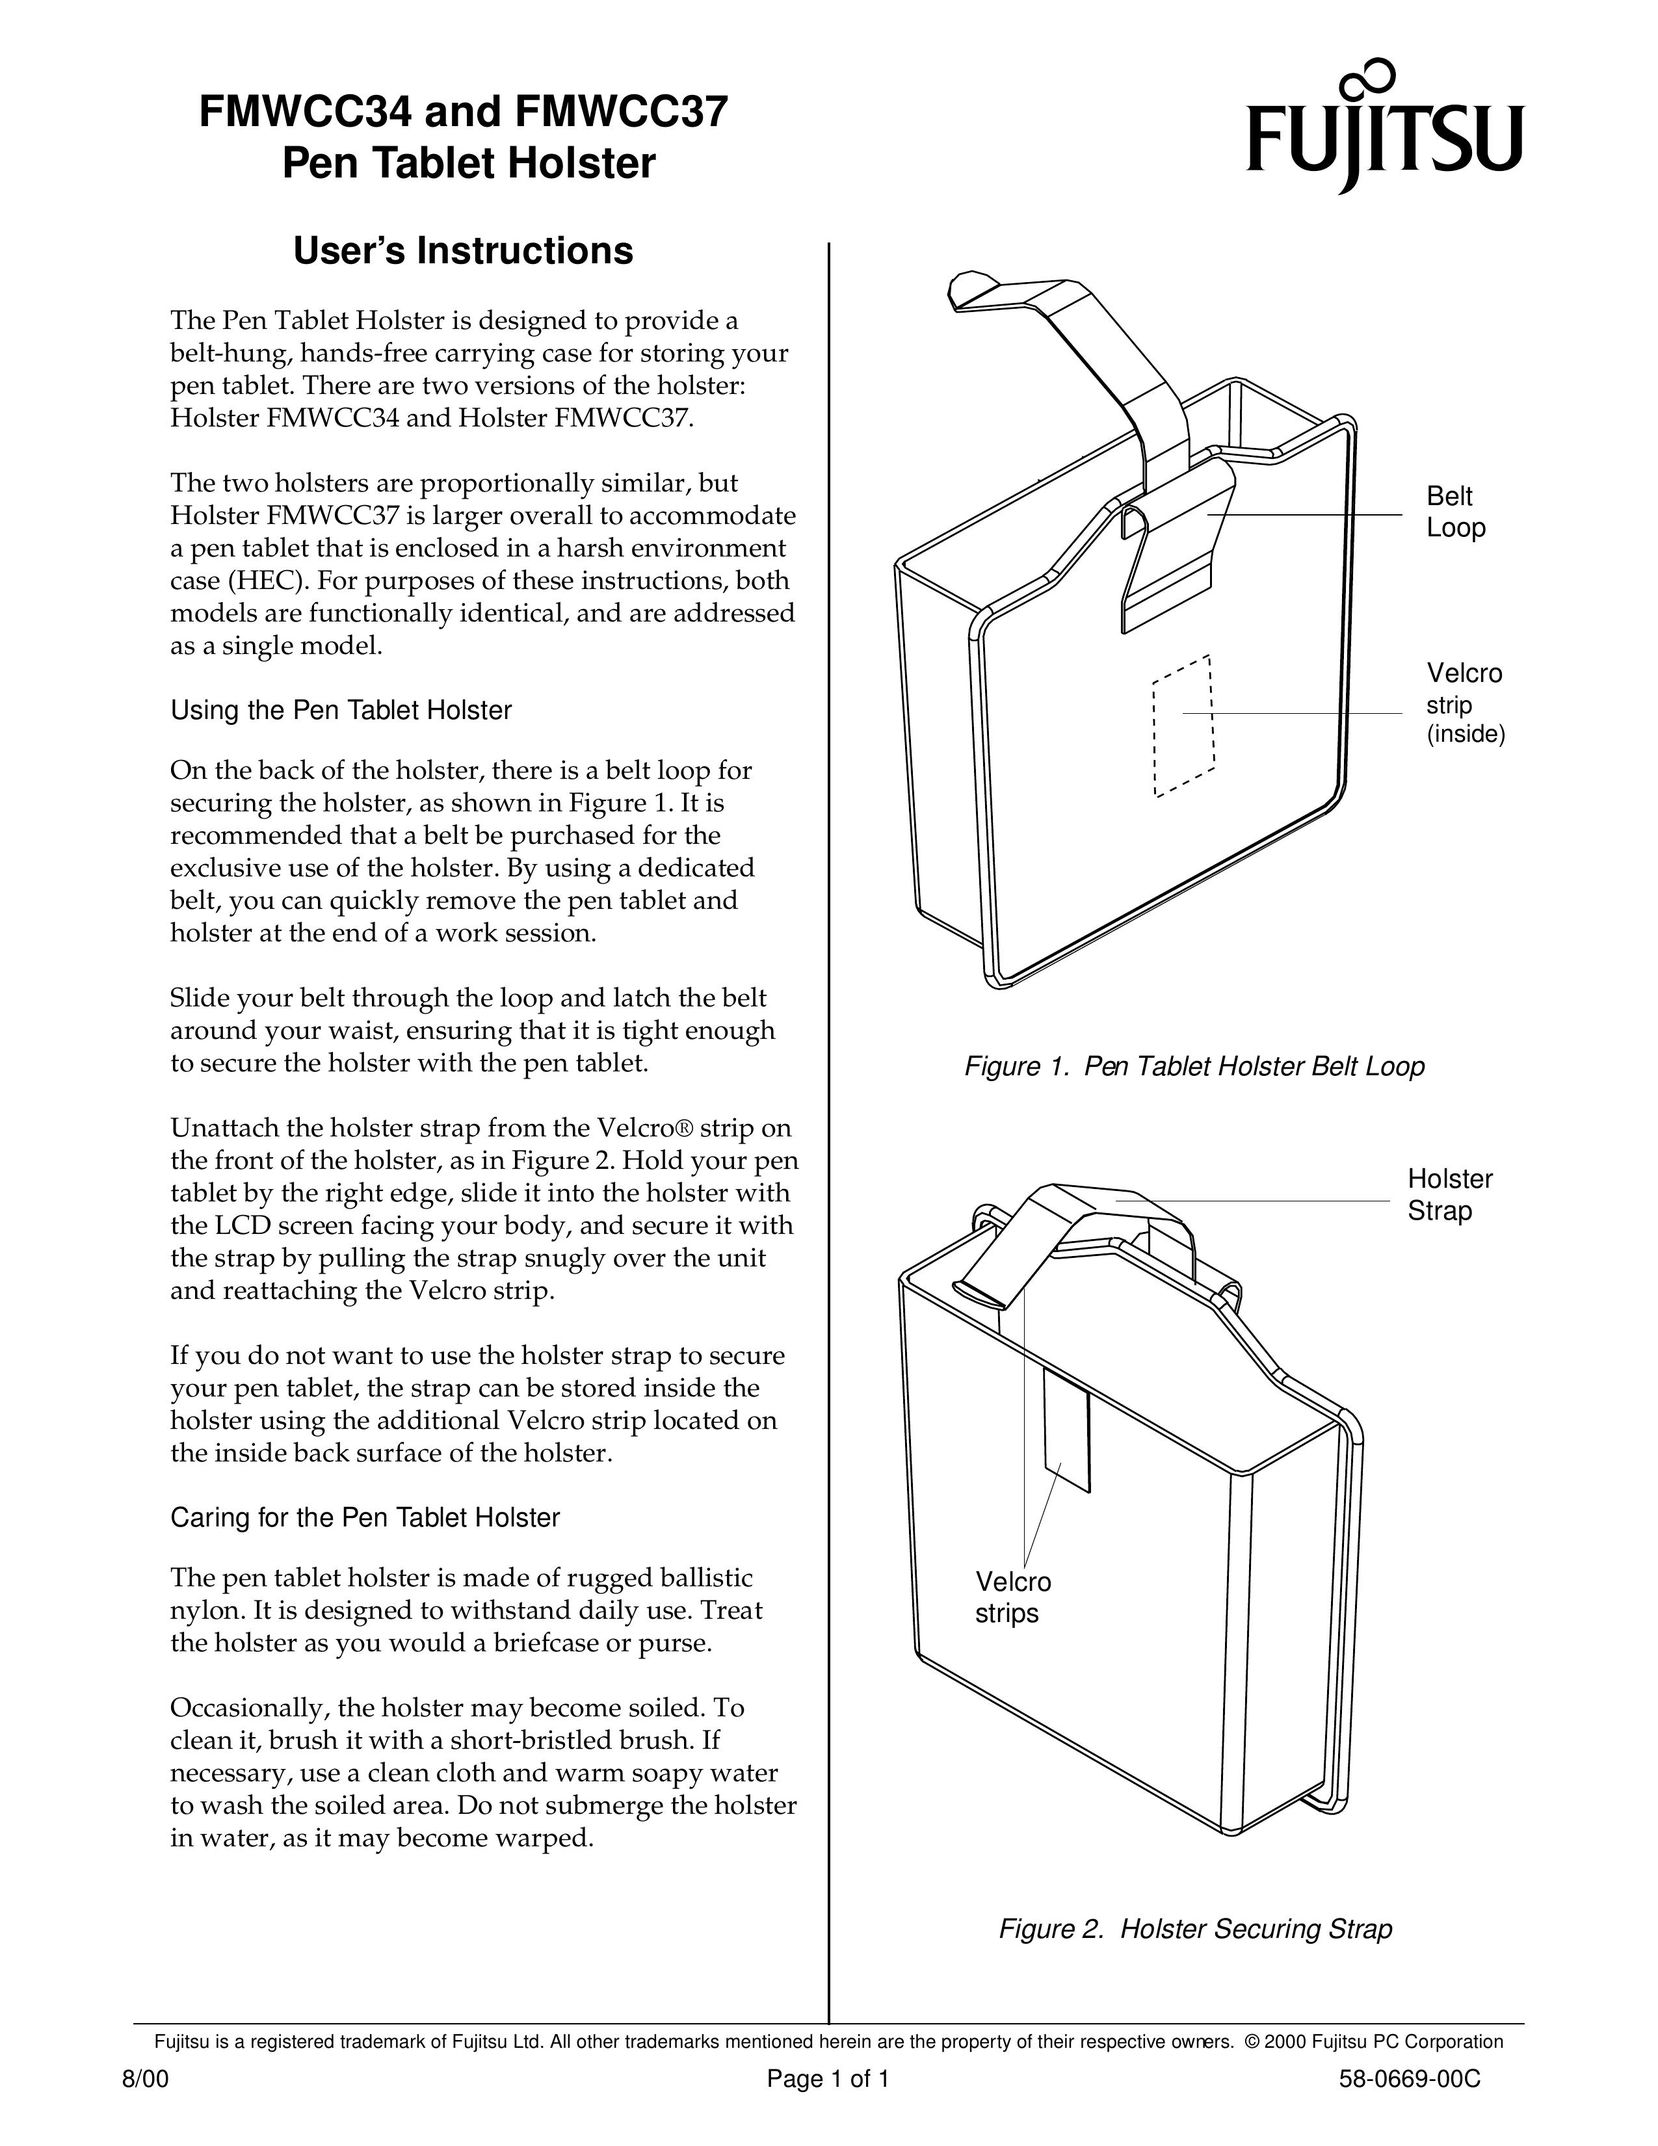 Fujitsu FMWCC34 Carrying Case User Manual